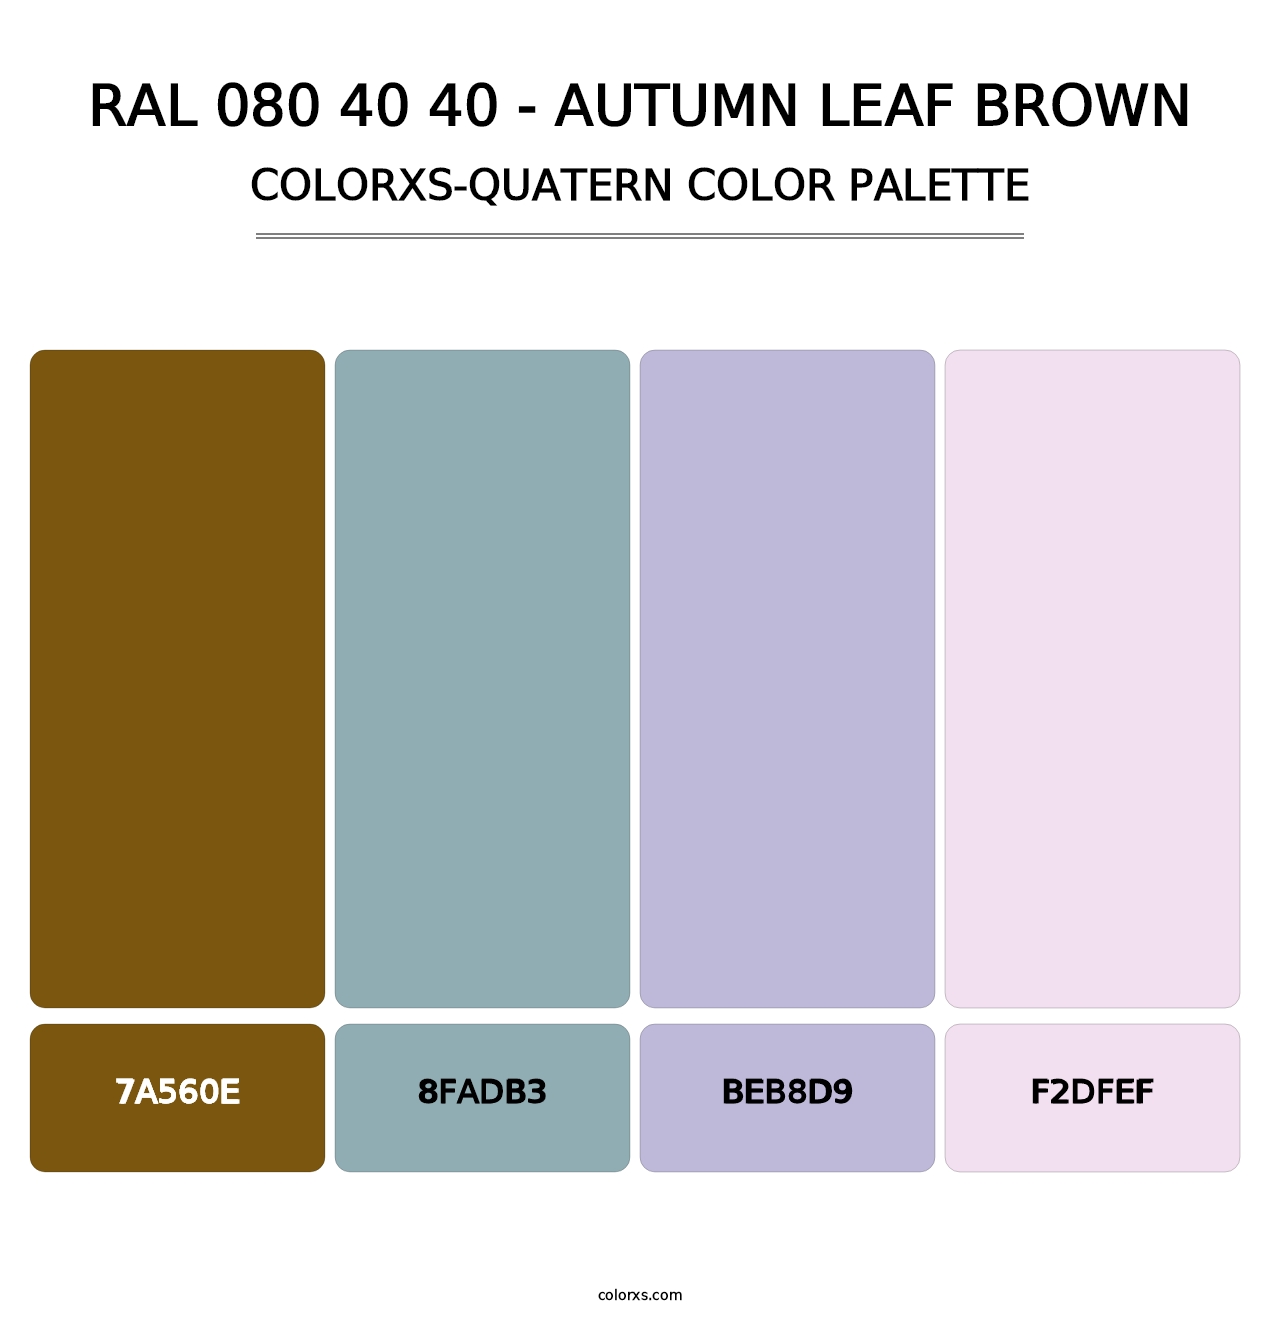 RAL 080 40 40 - Autumn Leaf Brown - Colorxs Quatern Palette